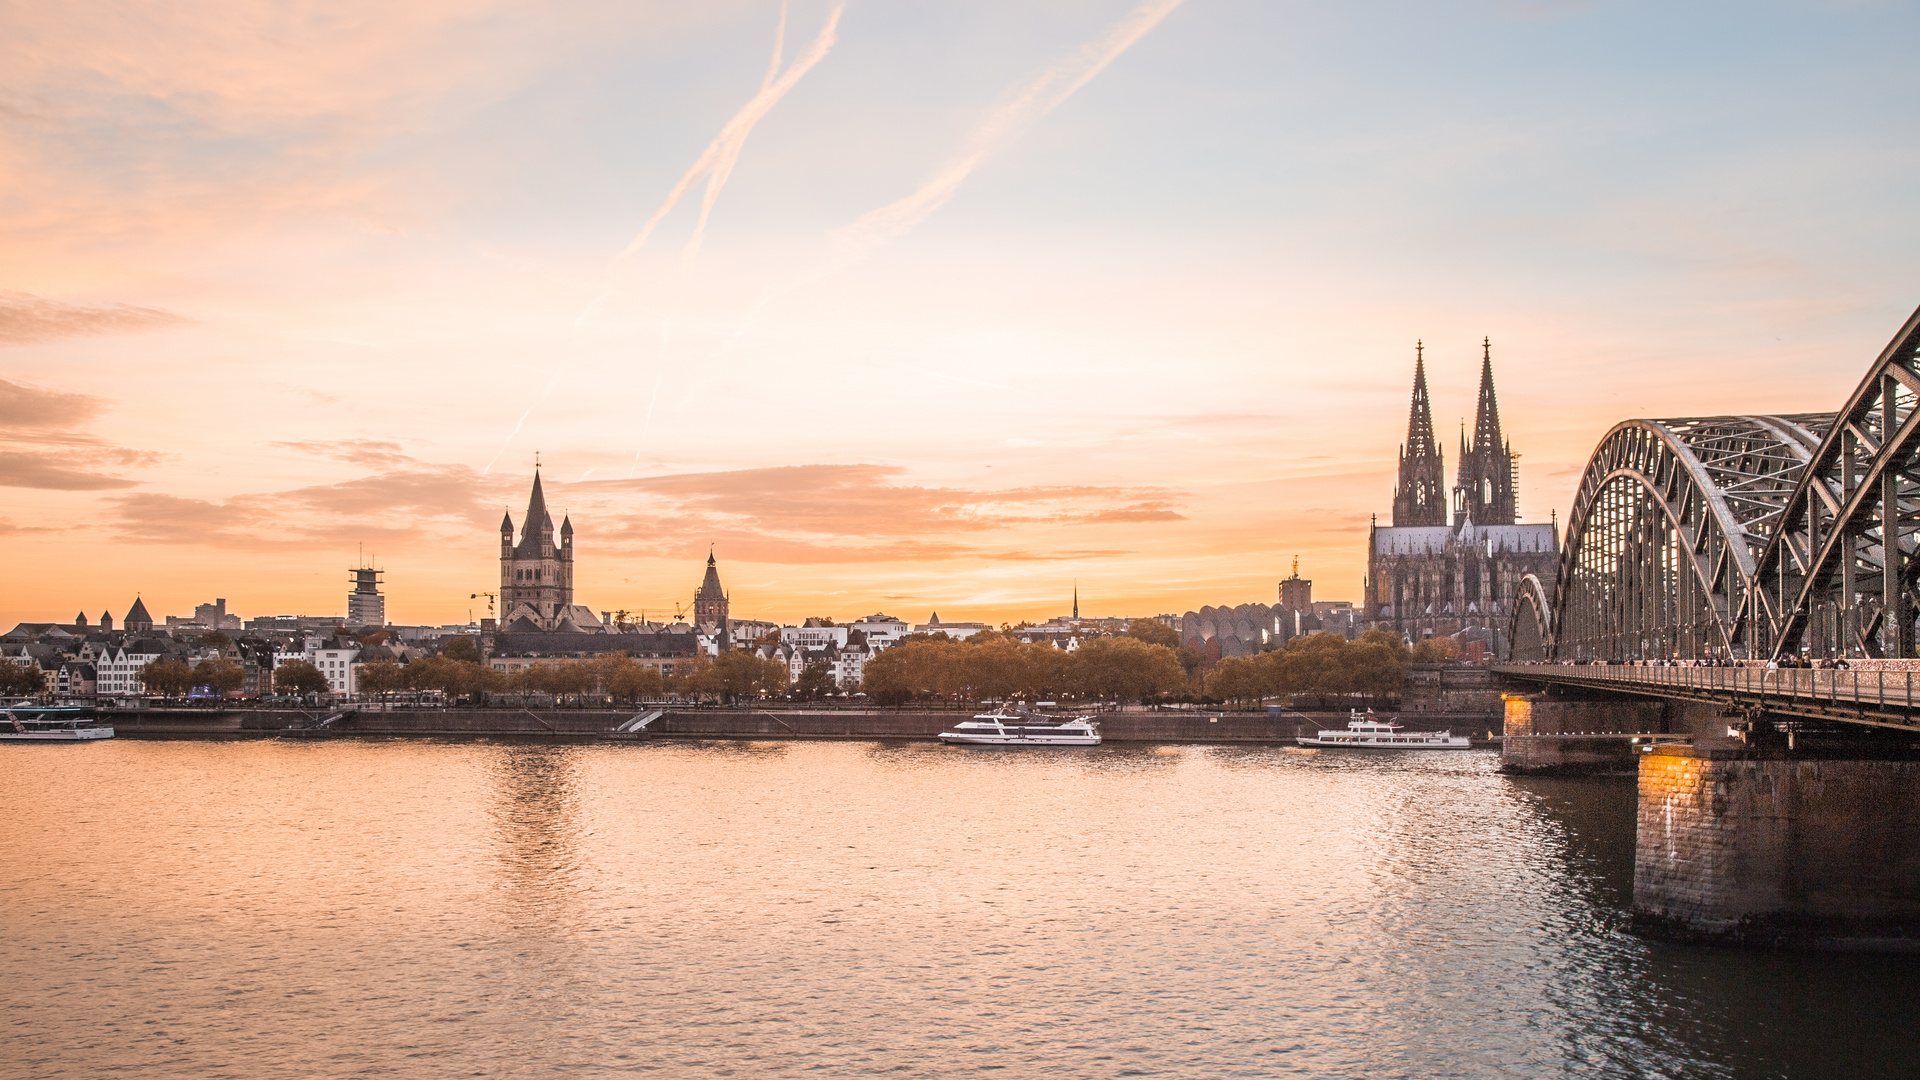 Sonnenuntergang by Köln